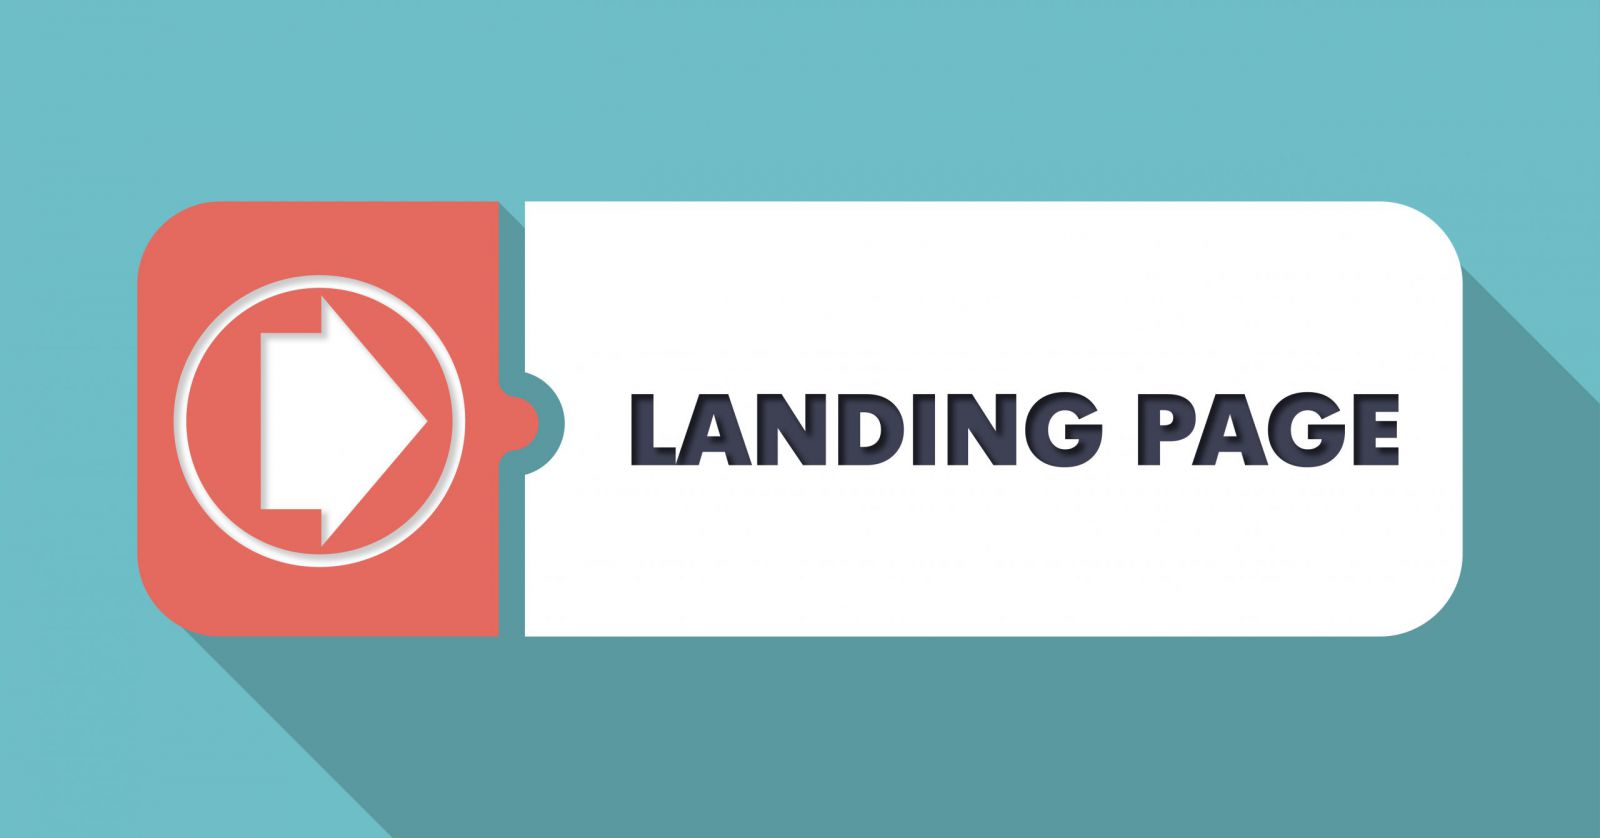 landingpage